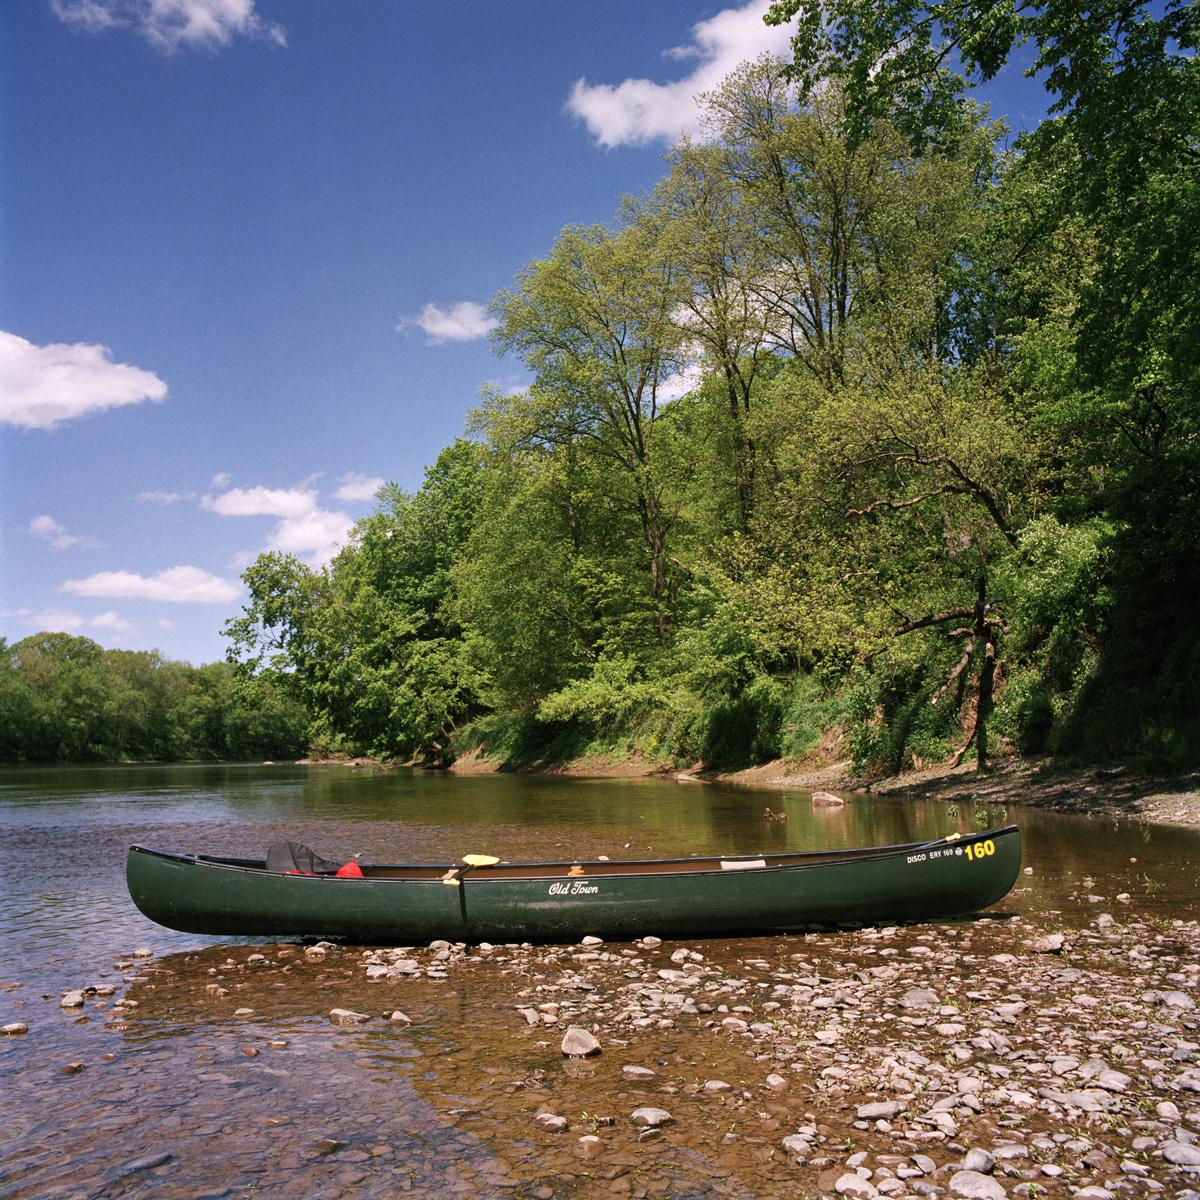 Canoe in River, Delaware Water Gap National Recreation Area, NJ